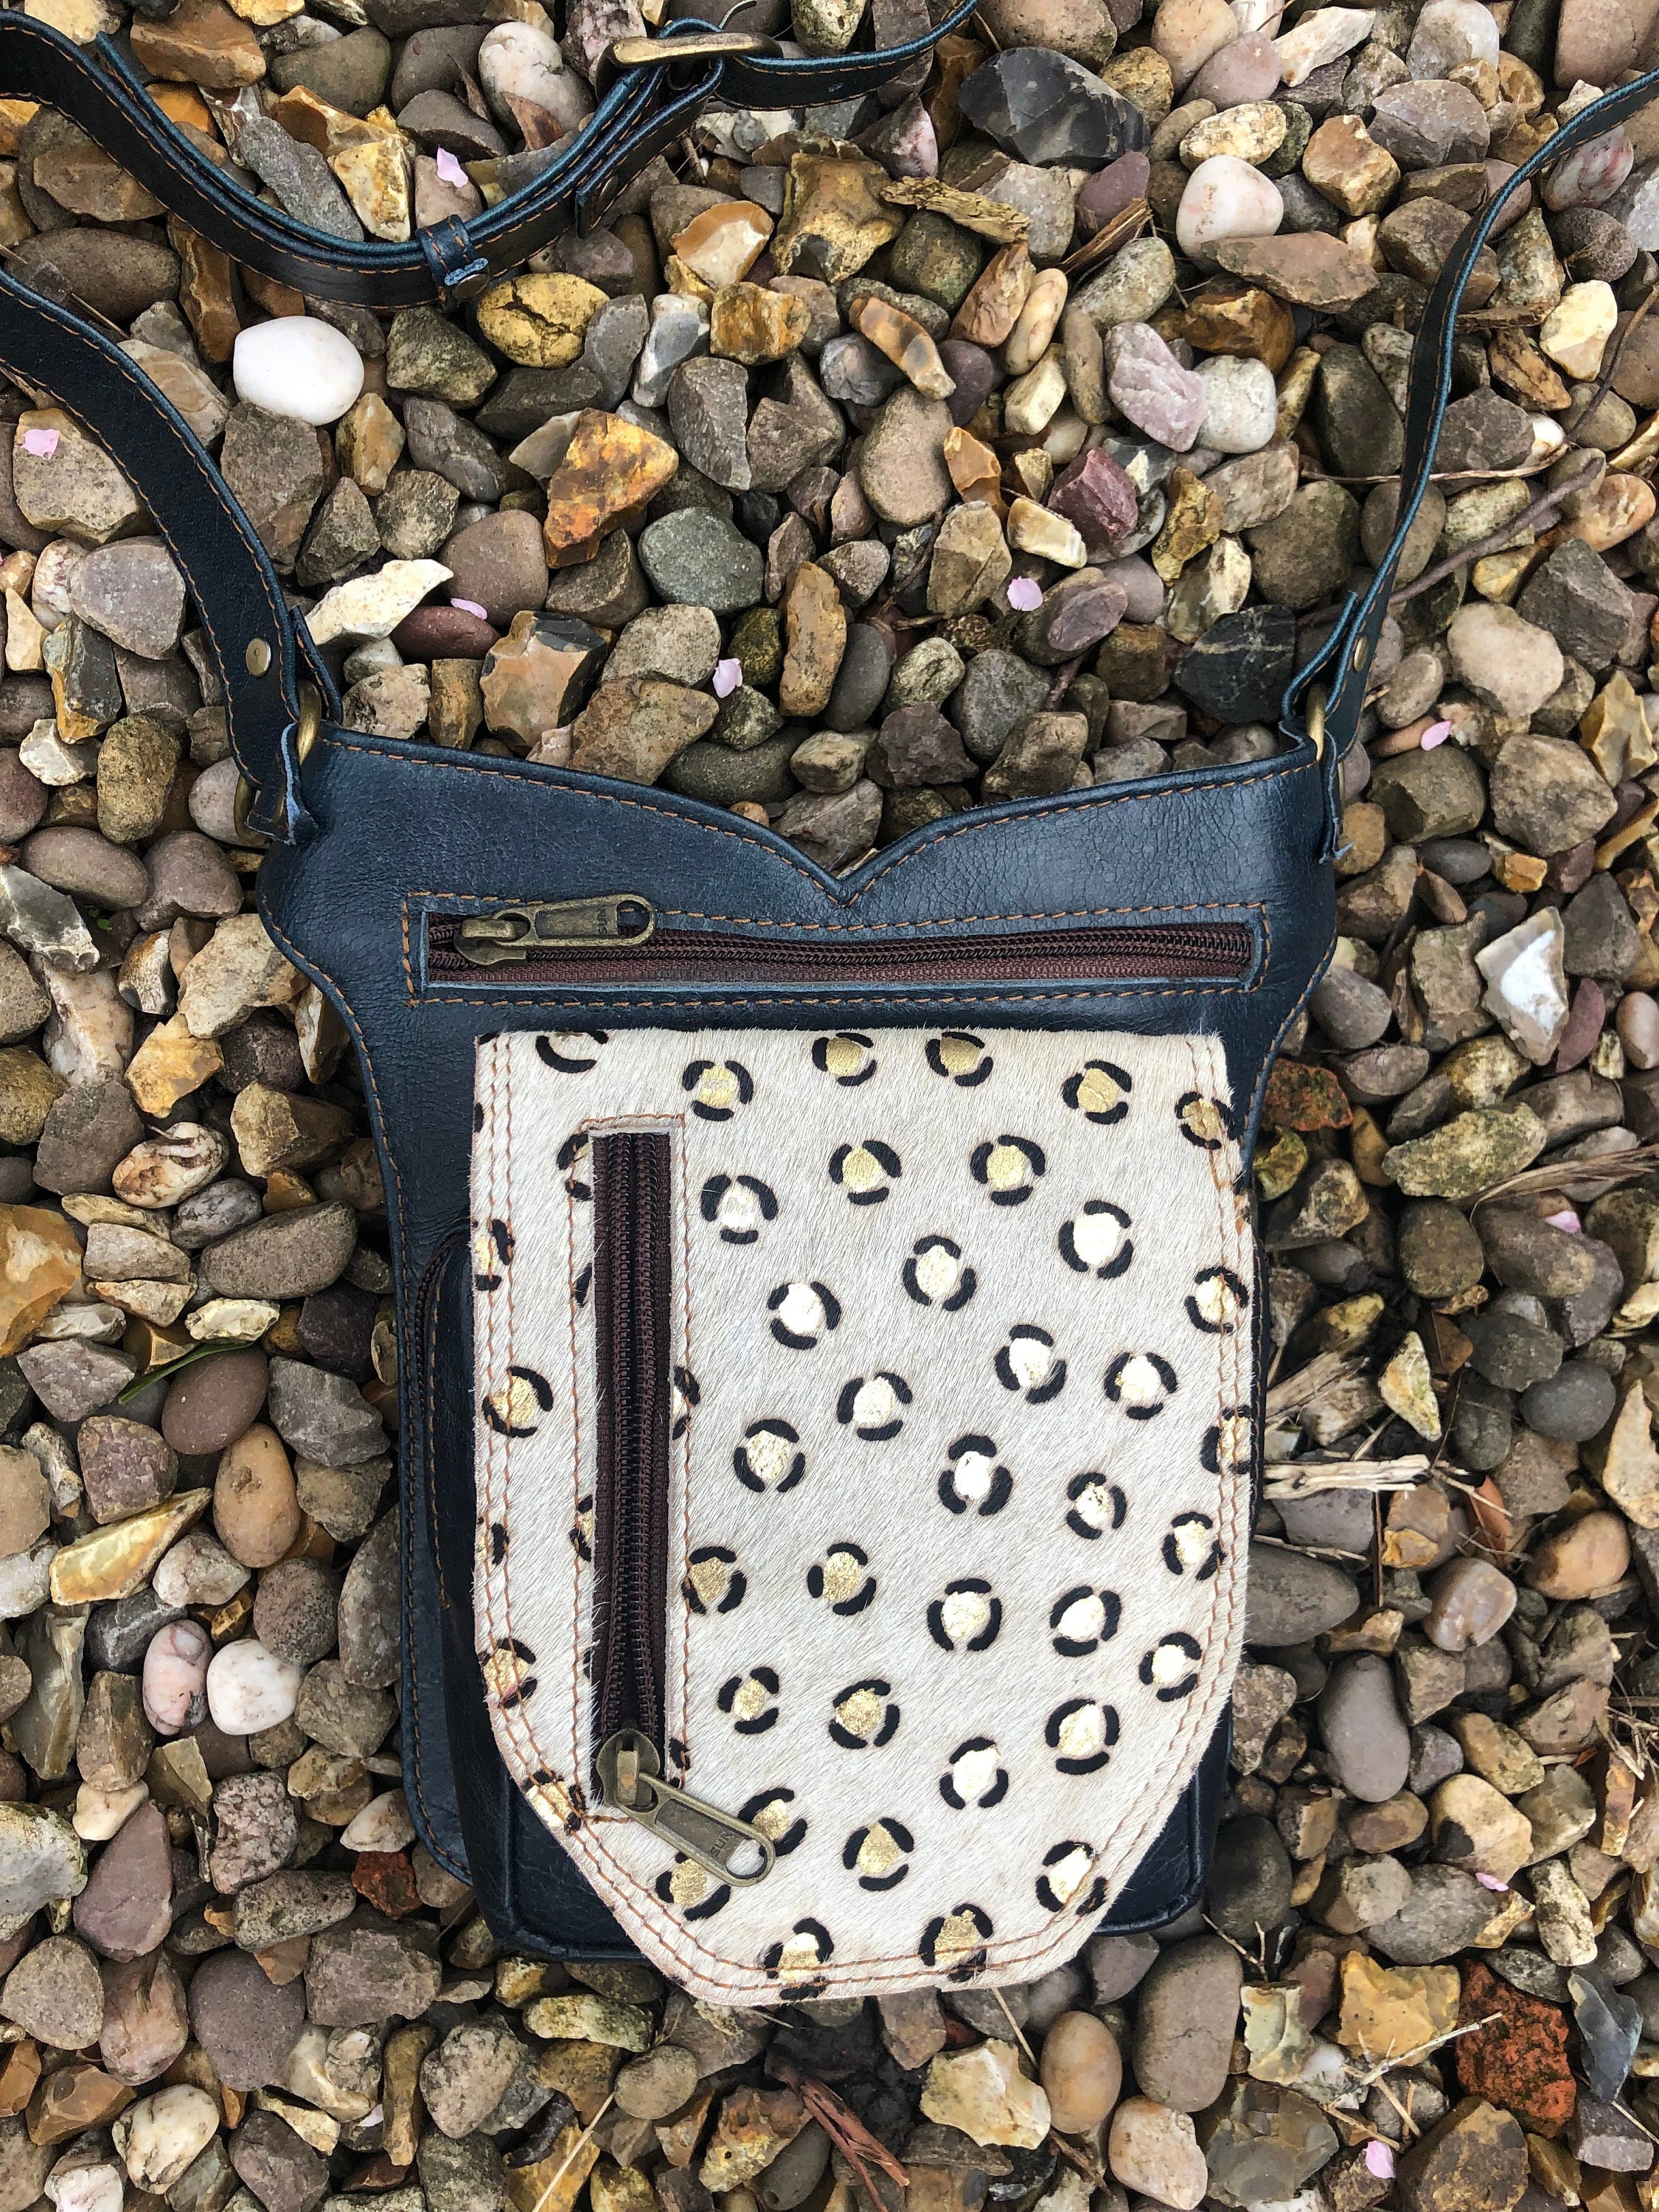  M MOTIKUL Belt Bag for Women Fashion Crossbody Fanny Packs  Causal Waist Hip Bum Bag Leather Chest Daypack Purses Travel Pouch Sling  Backpack Bag